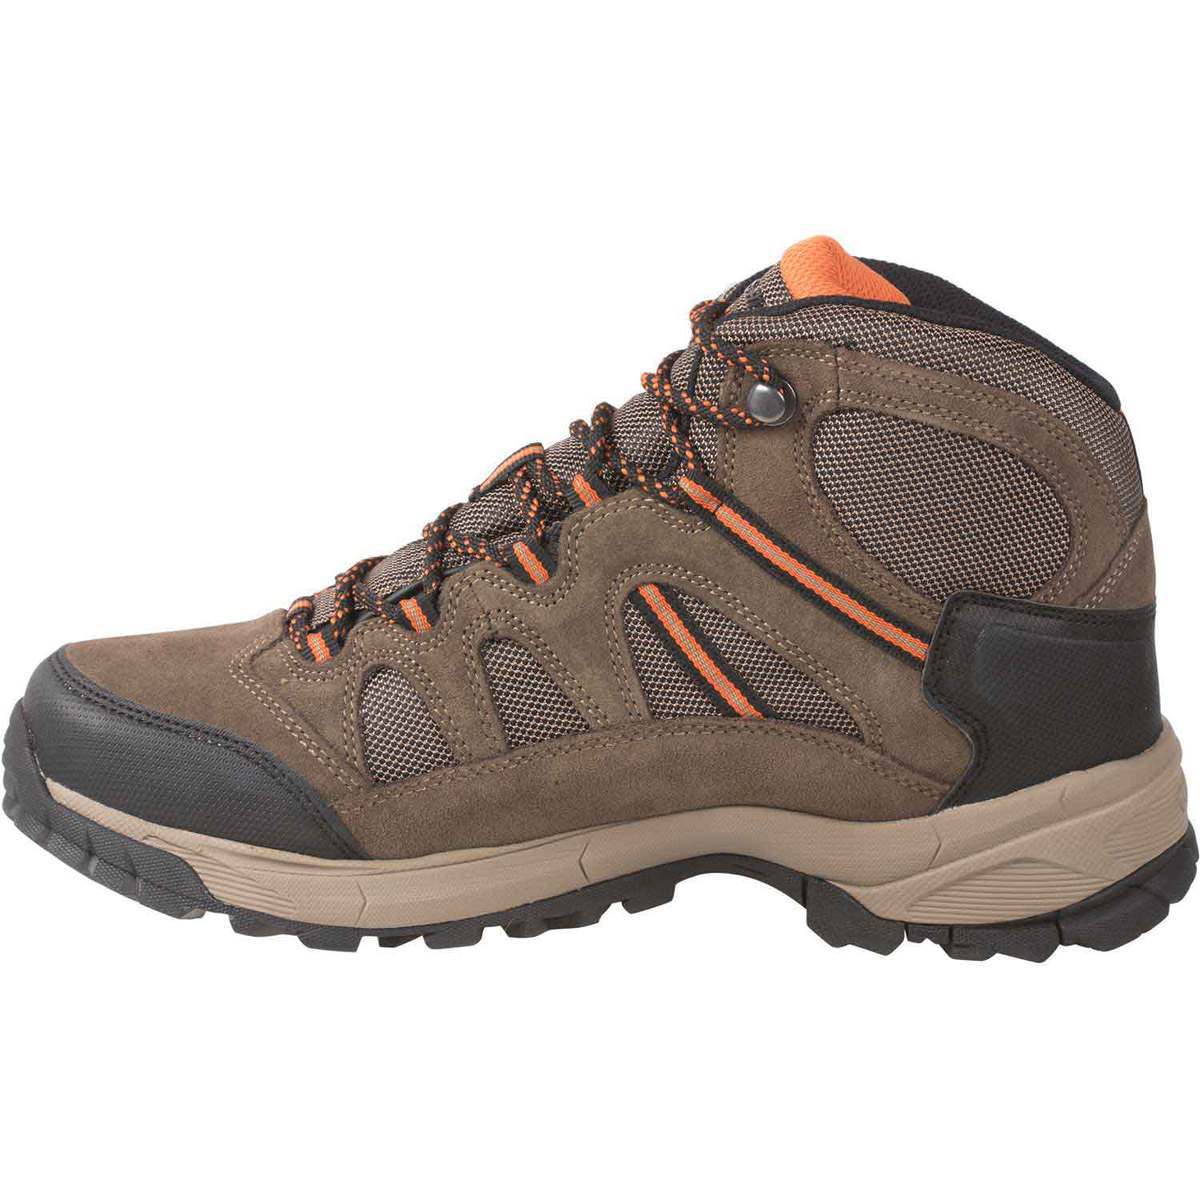 Hi-Tec Men's Wasatch Waterproof Mid Hiking Boots - Smoke - Size 11 ...